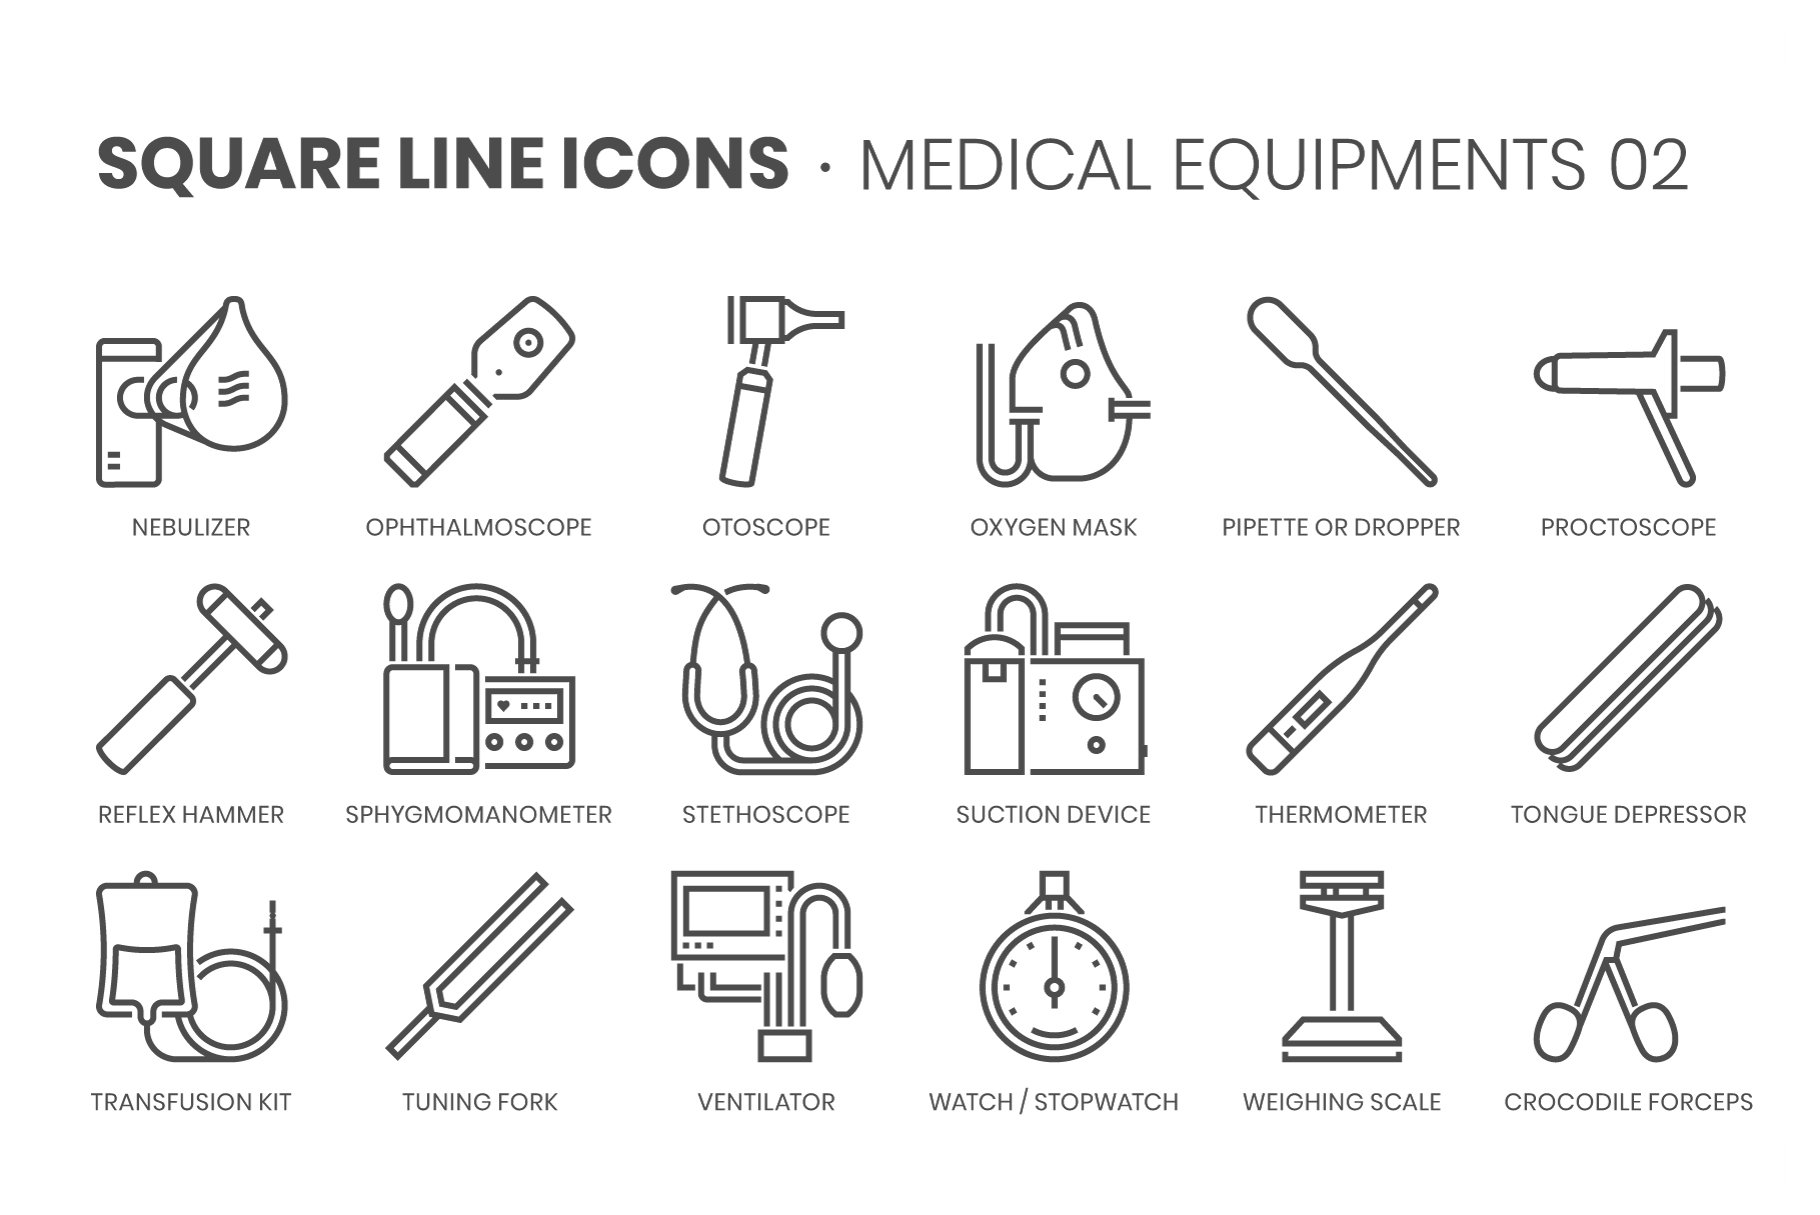 sq47 medical equipments 02 712